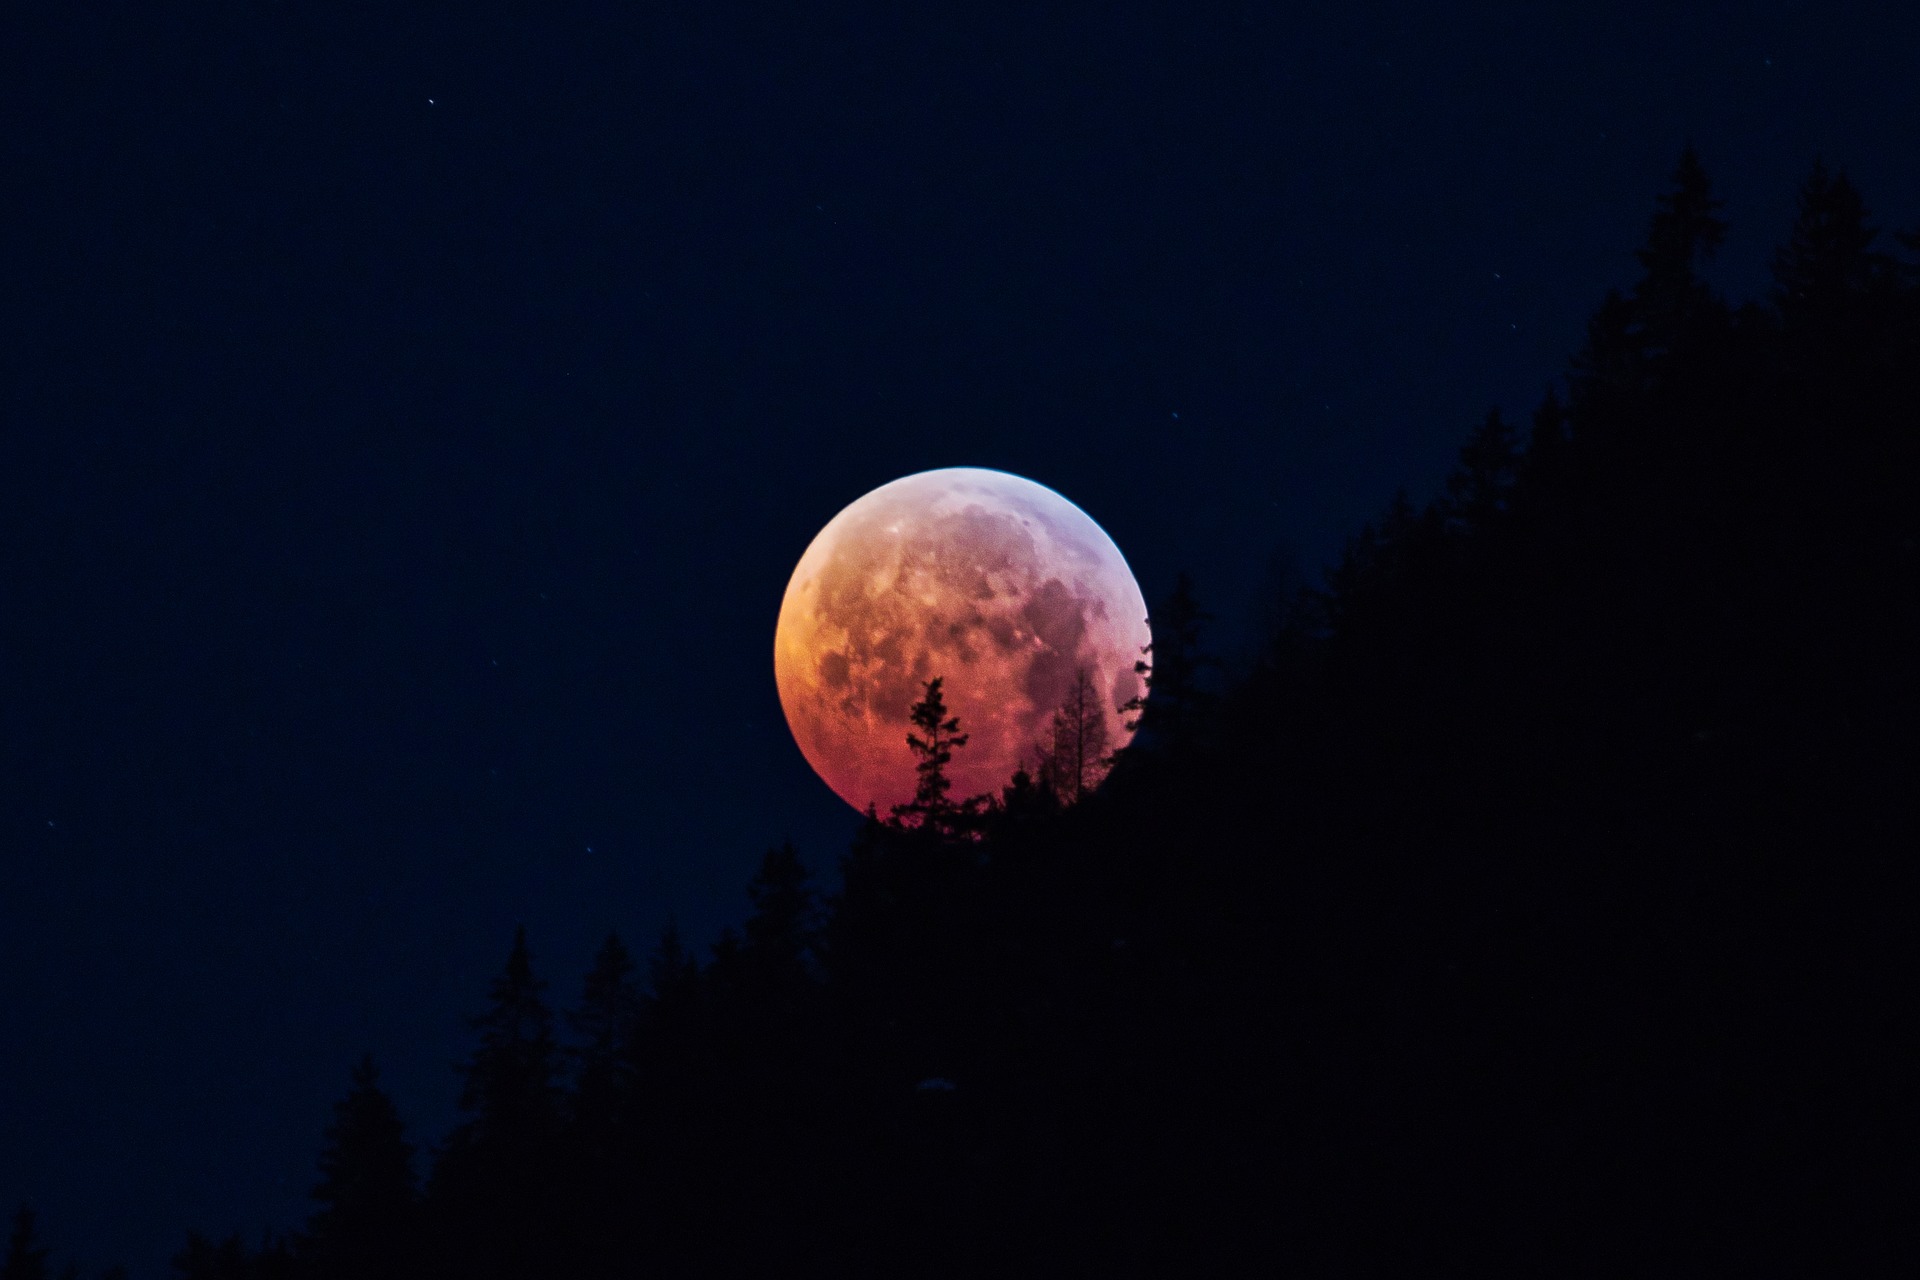 How to Photograph a Lunar Eclipse